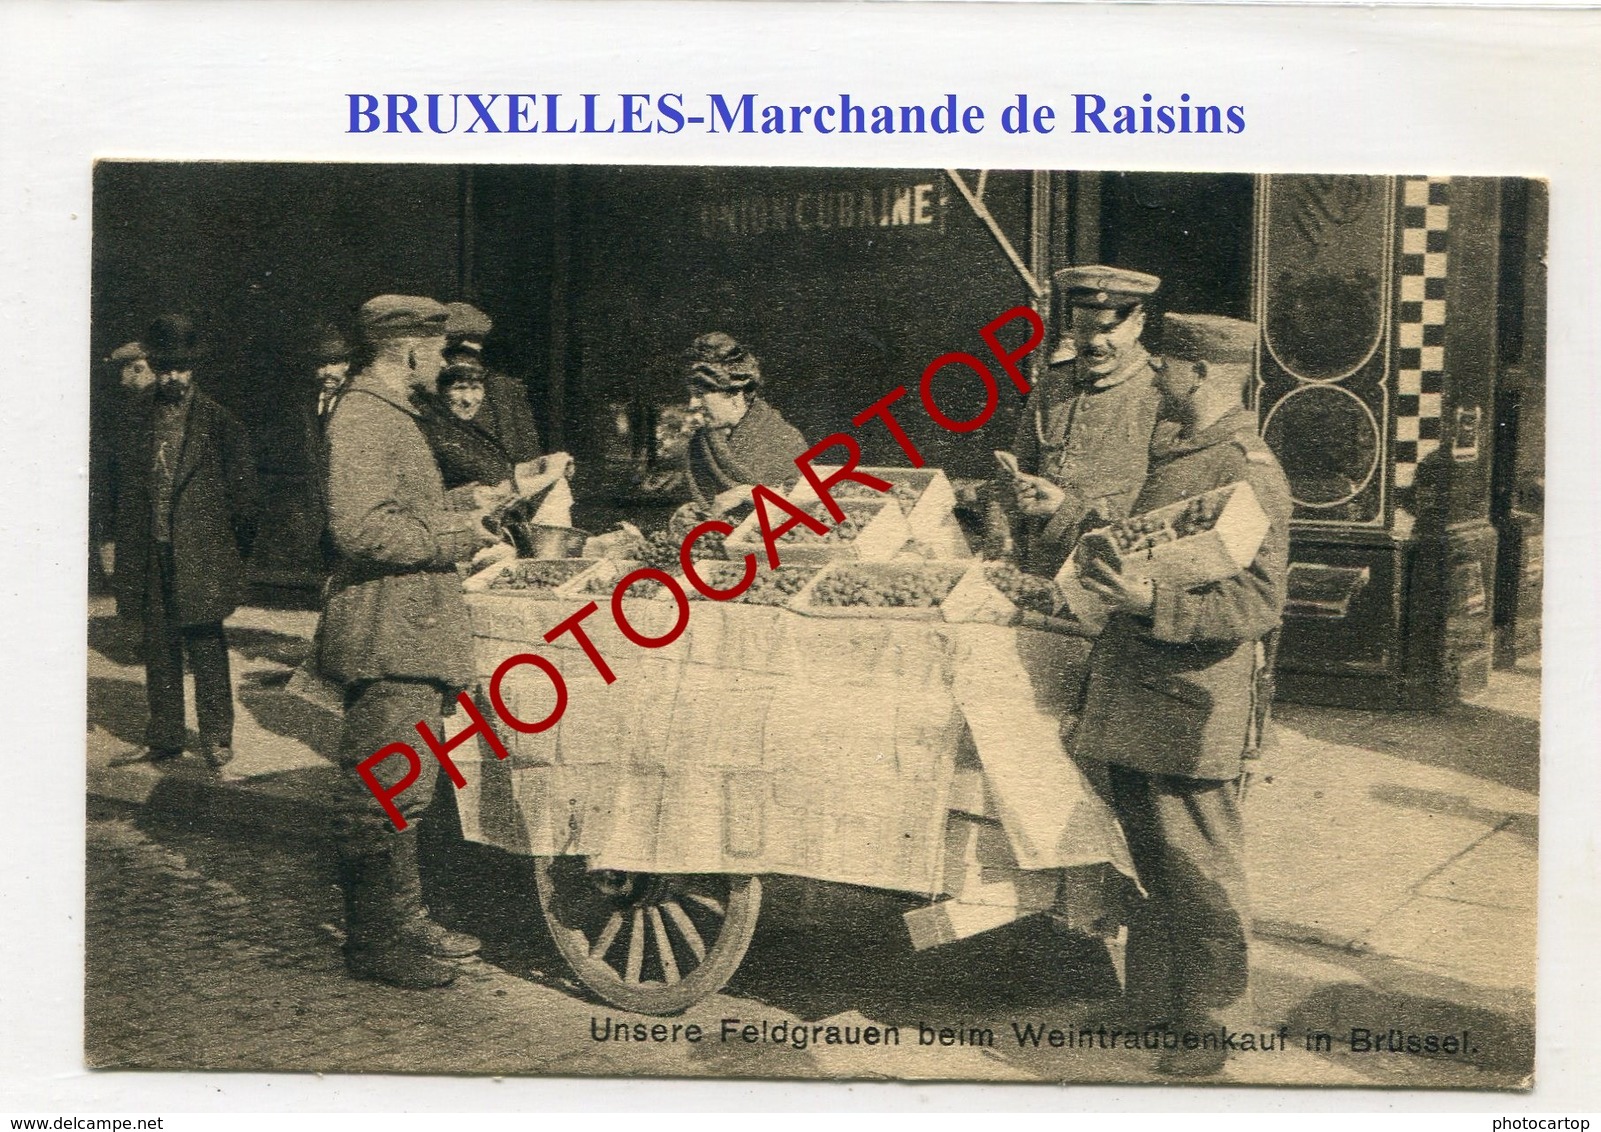 BRUXELLES-BRÜSSEL-Marchande De Raisins-CARTE Allemande-Guerre 14-18-1WK-BELGIQUE-BELGIEN- - Markten